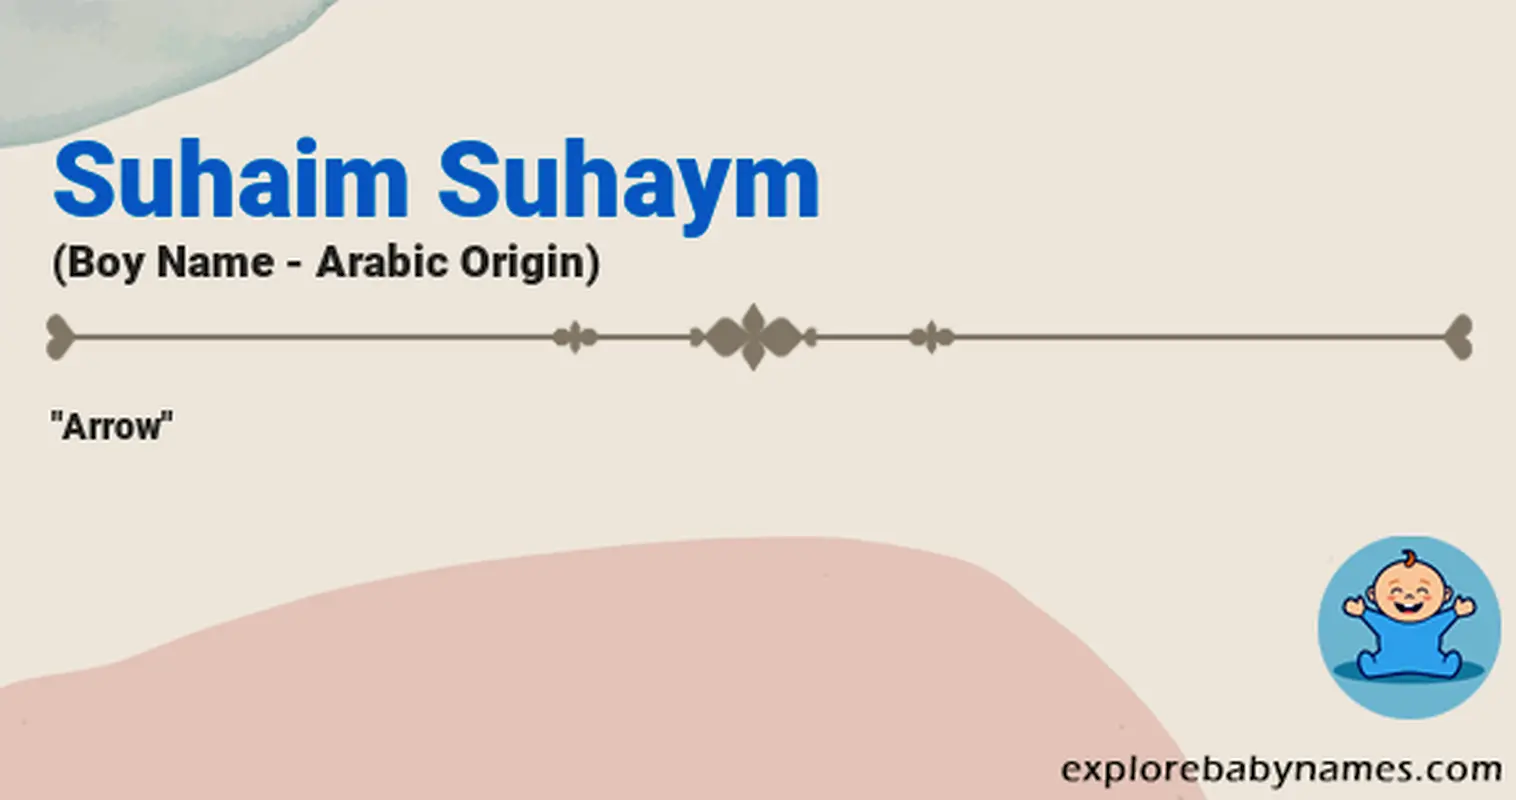 Meaning of Suhaim Suhaym